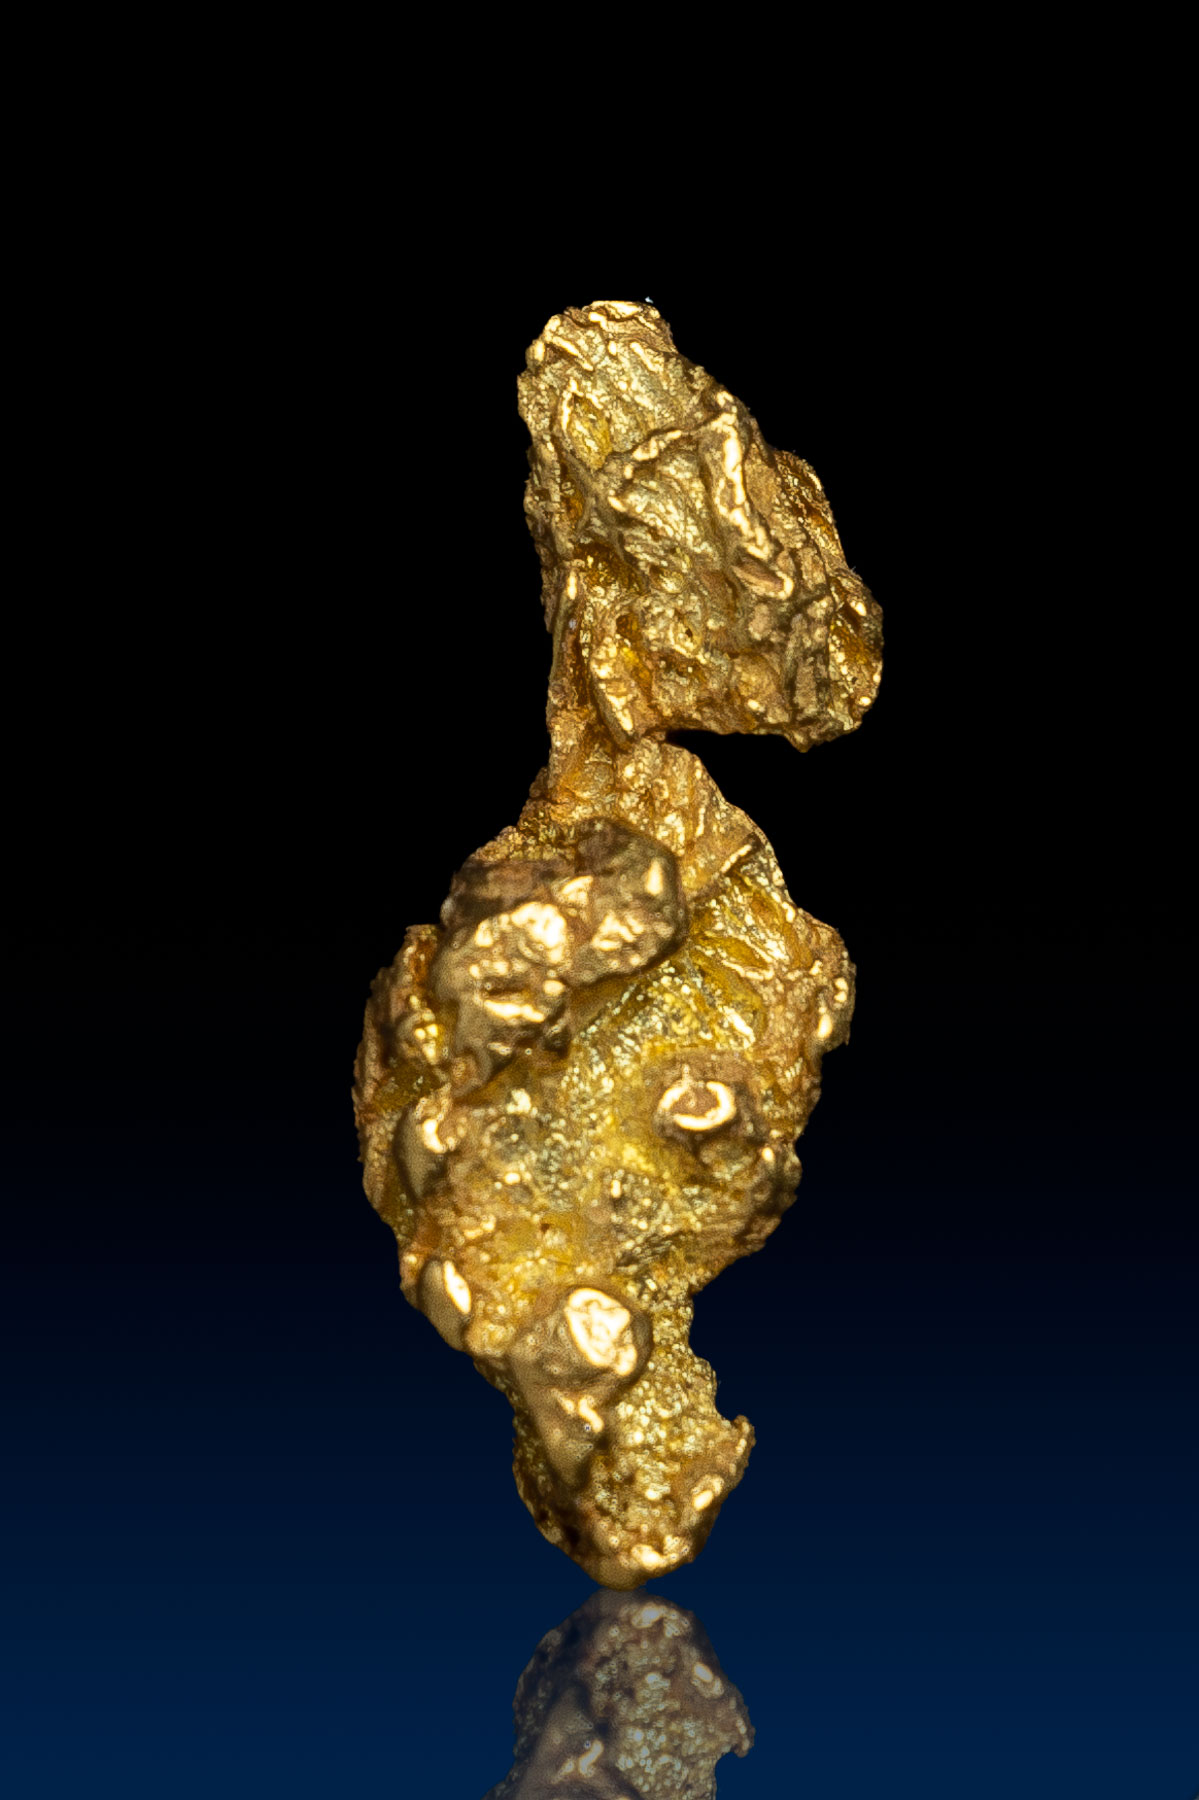 Long "Fishhook" Gold Nugget - from the Alaska 2022 Mining Season